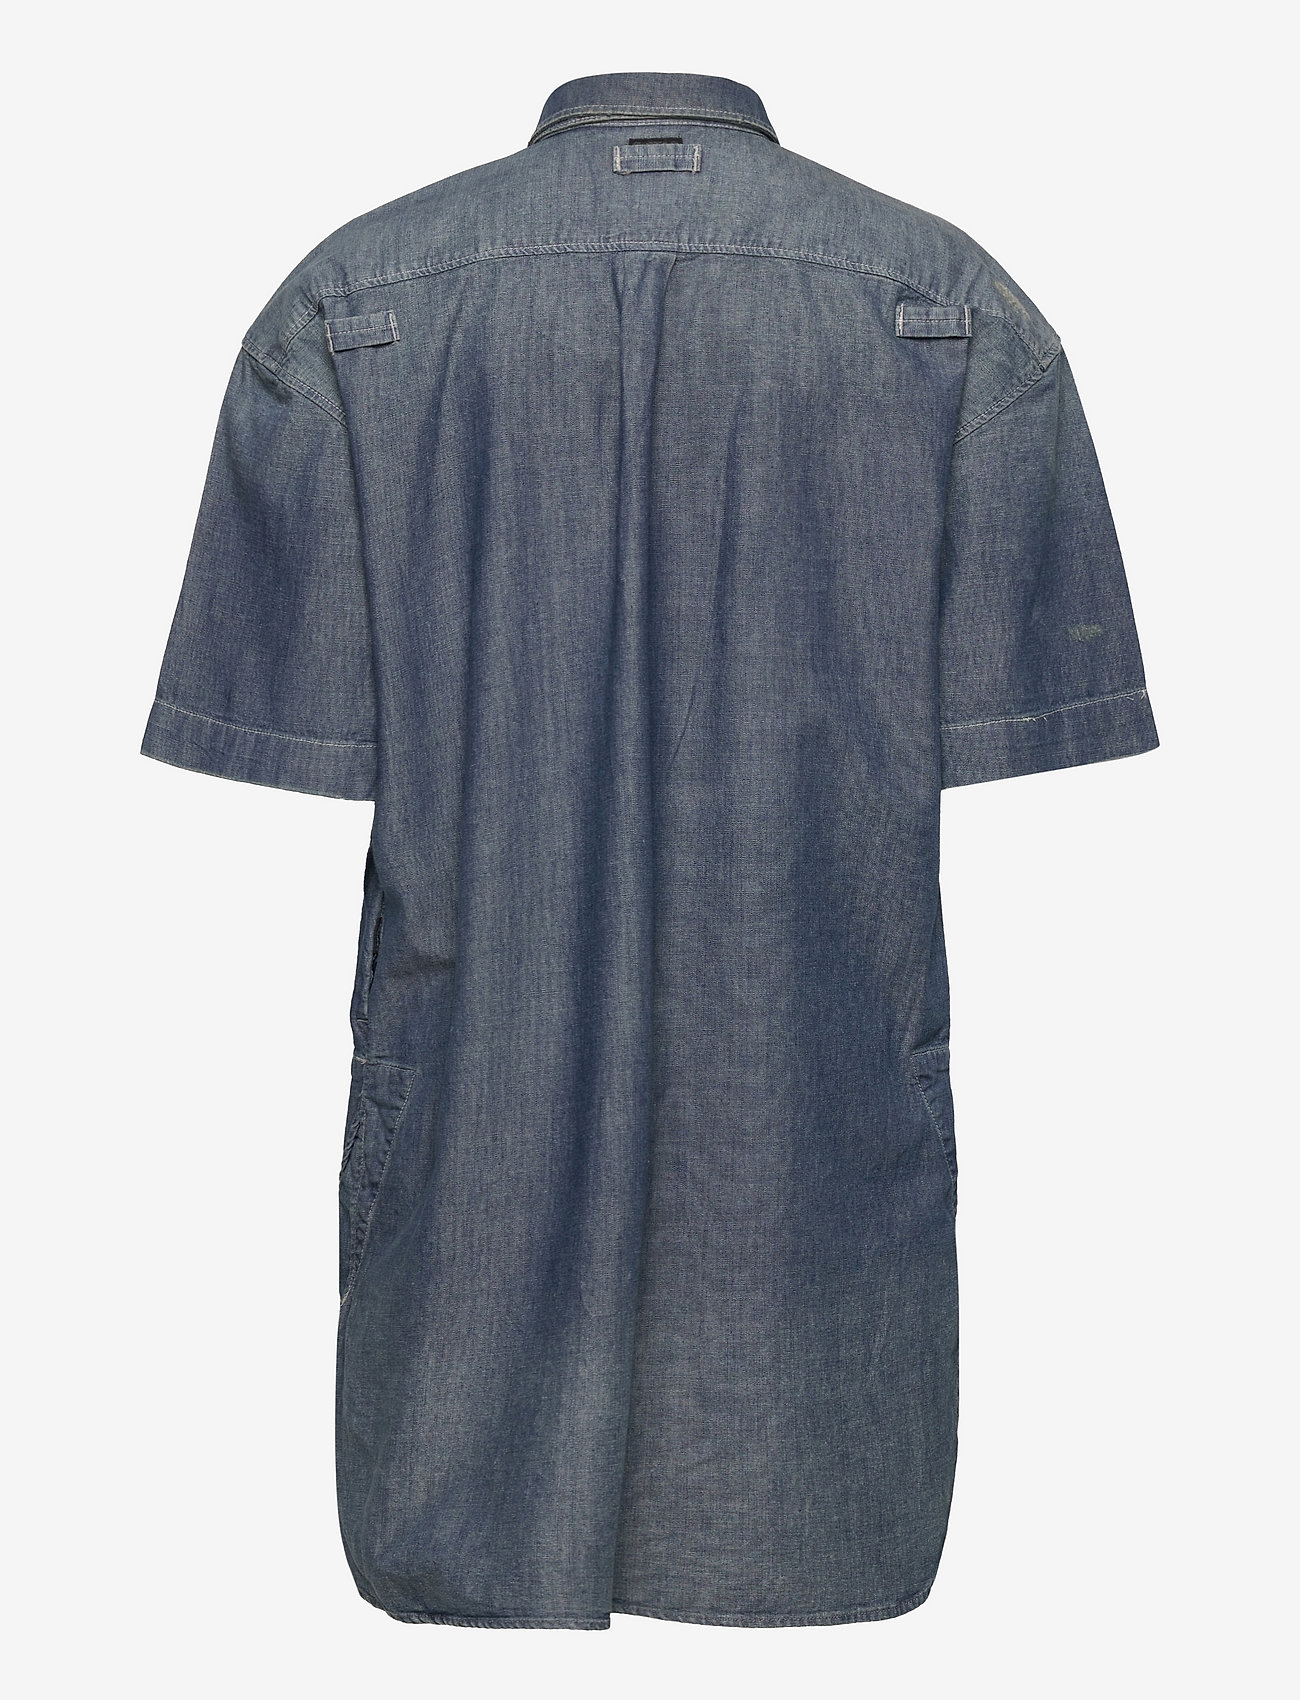 G-Star RAW - Shirt dress ss - shirt dresses - antic faded aegean blue - 1